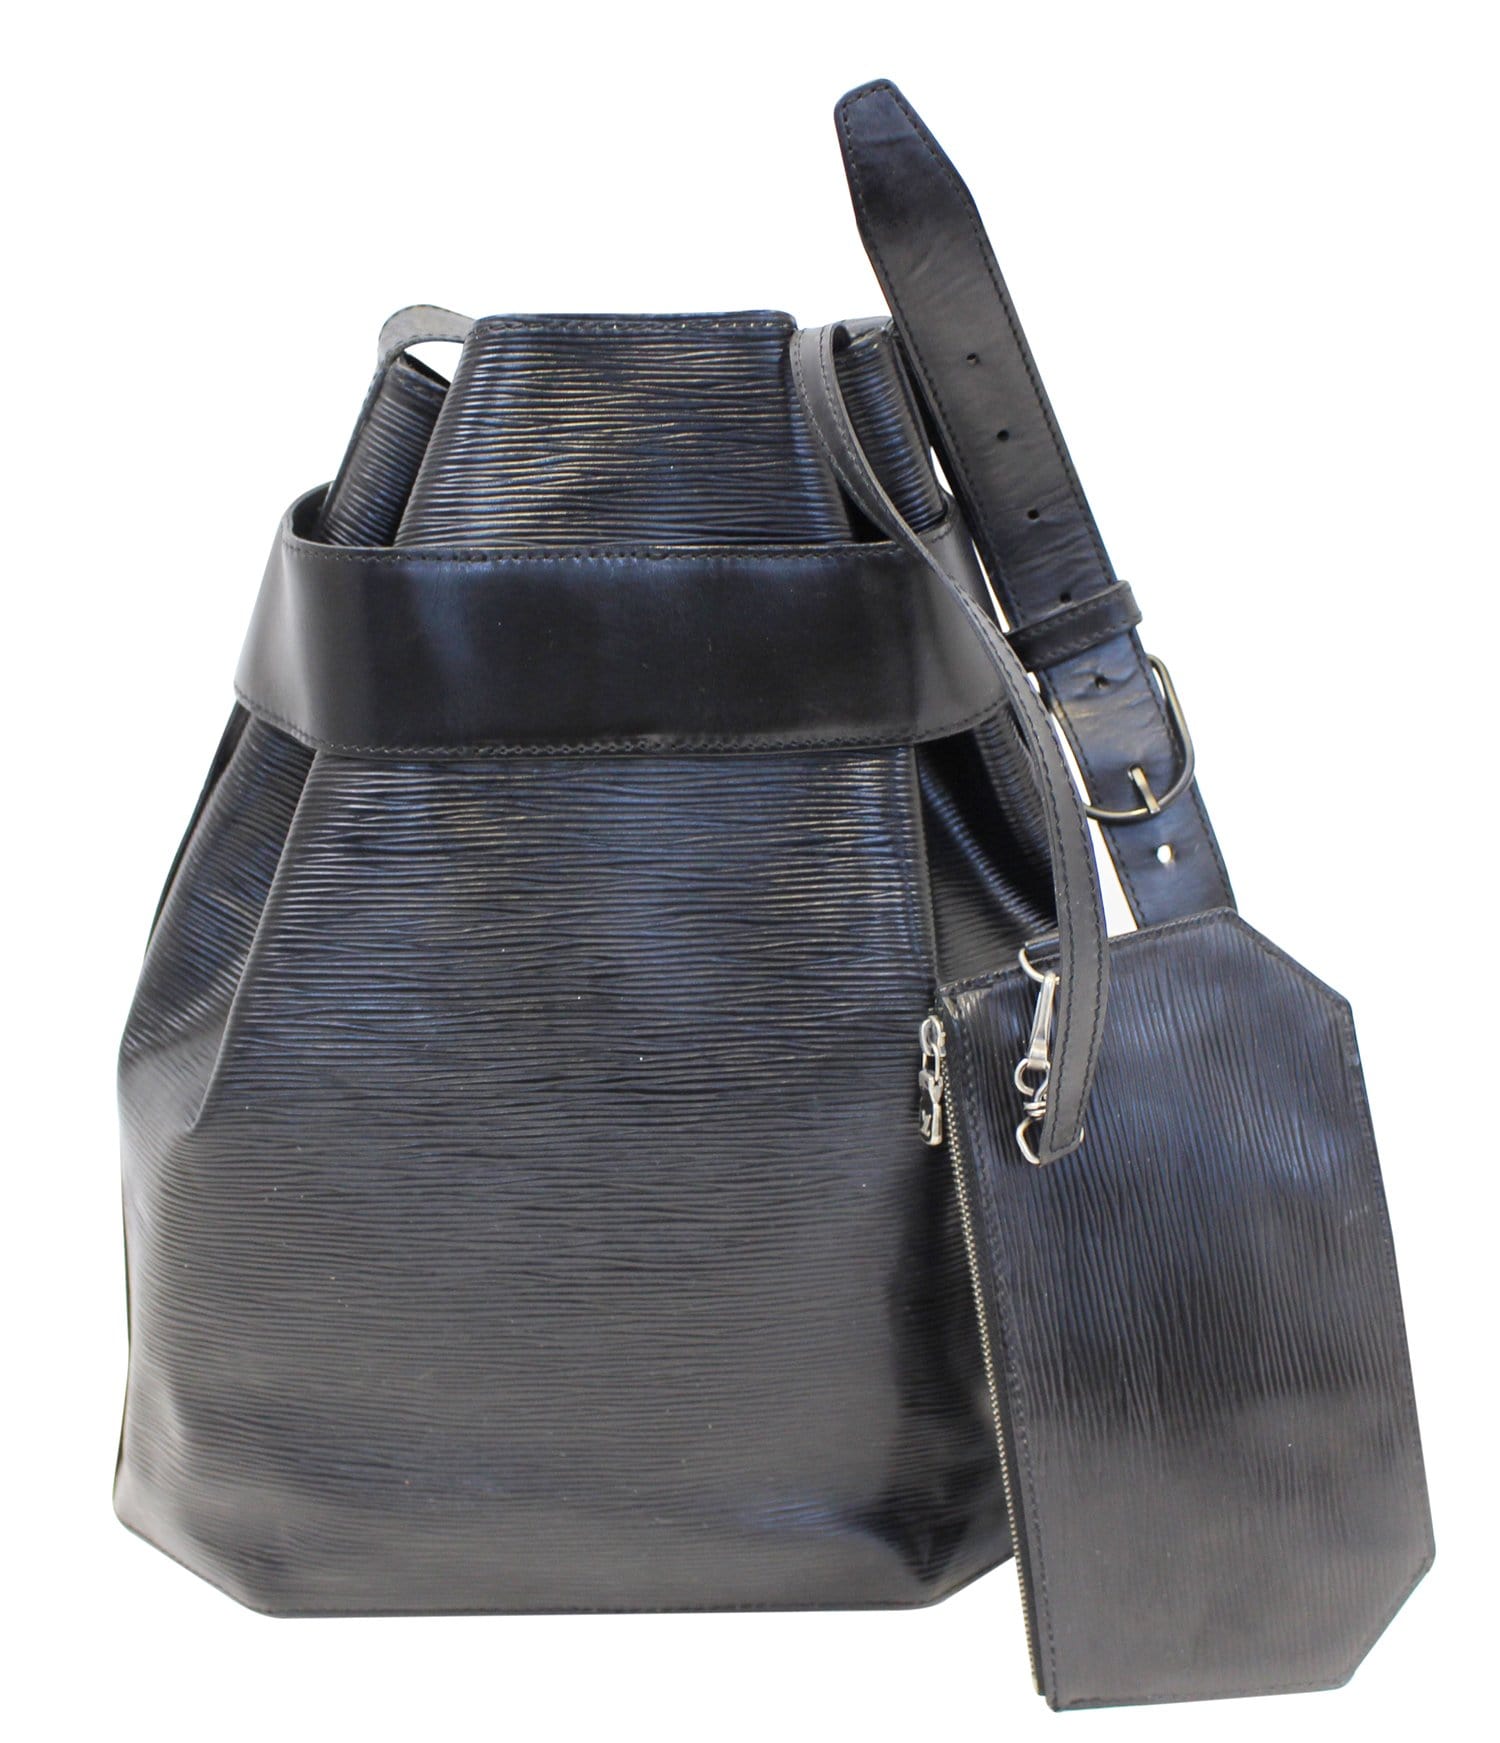 Louis Vuitton Black Epi Leather Clutch – The Don's Luxury Goods